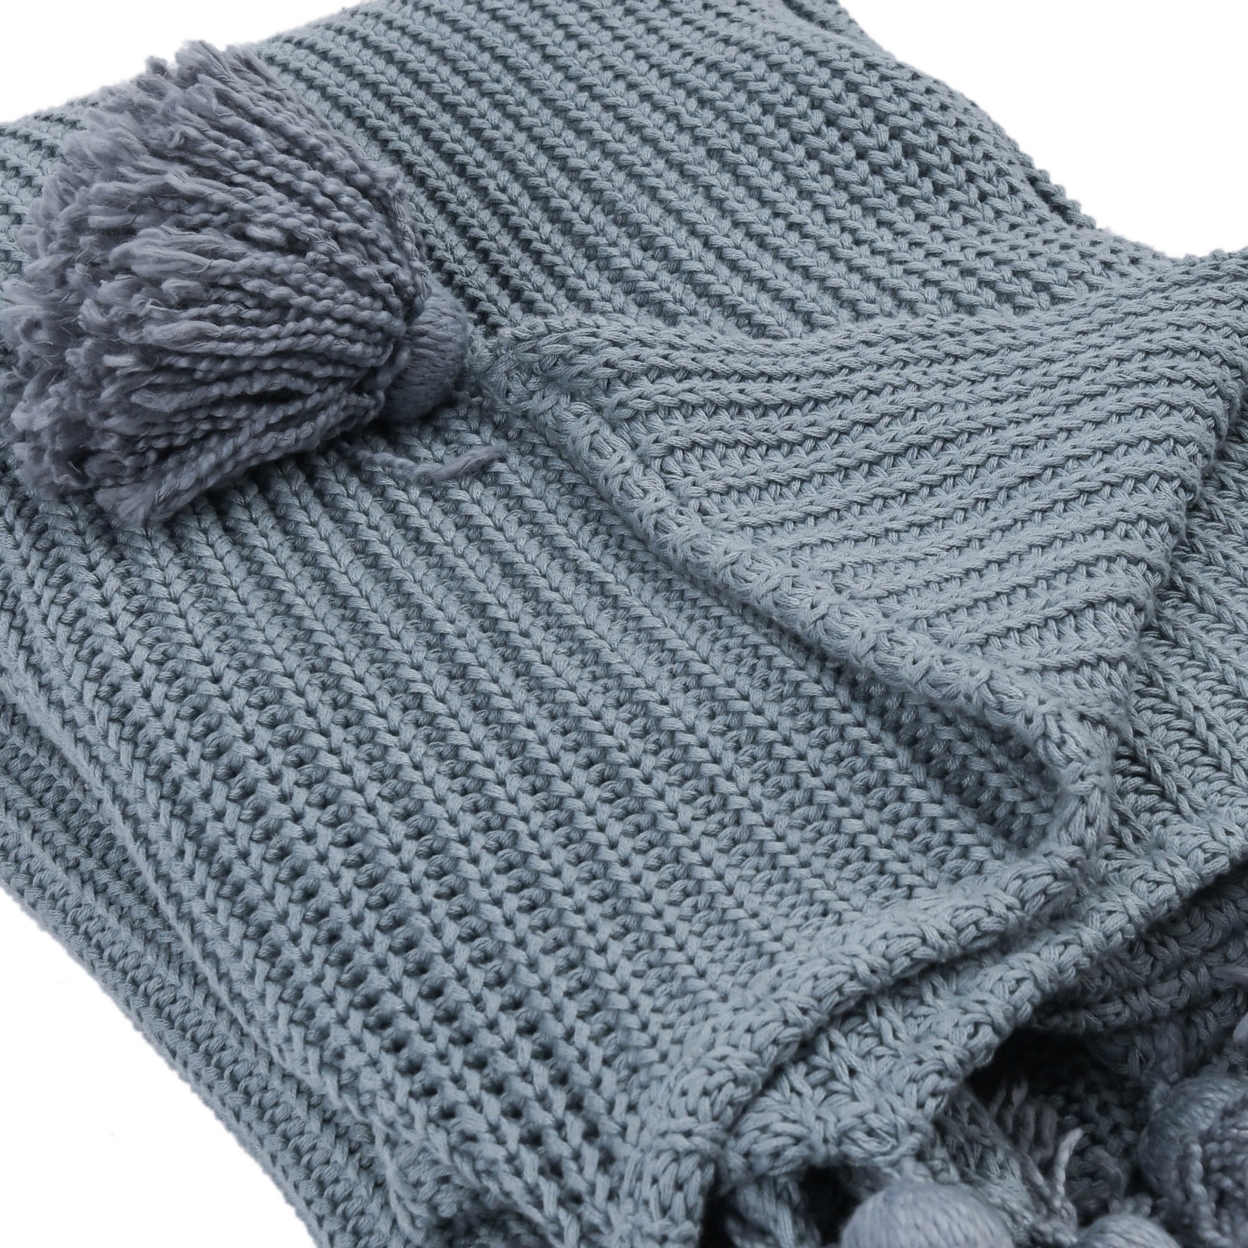 Dee 50 X 70 Soft Cotton Throw Blanket, Knitted Design, Woven Tassels, Blue- Saltoro Sherpi